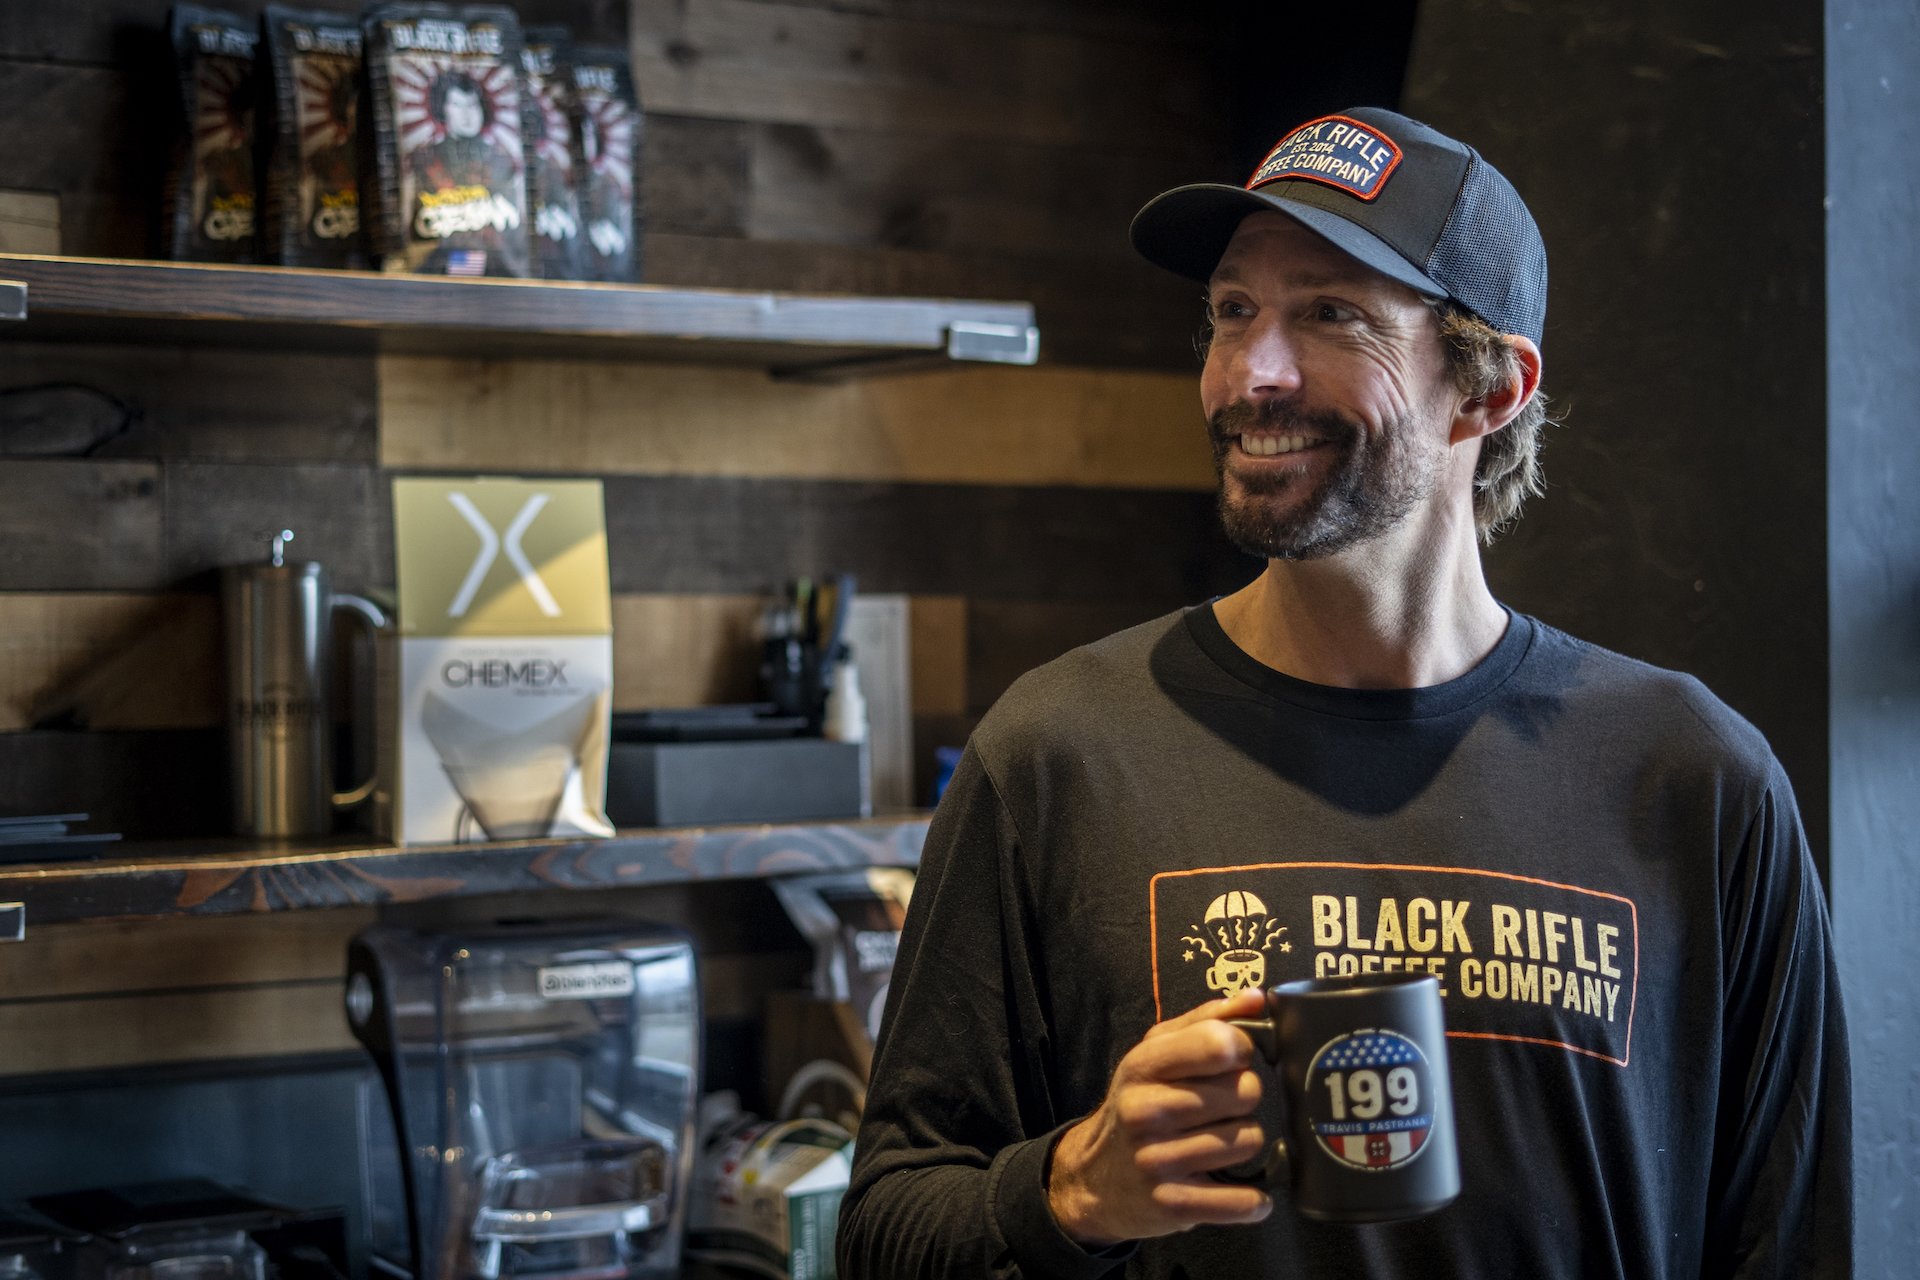 Black Rifle Coffee Company